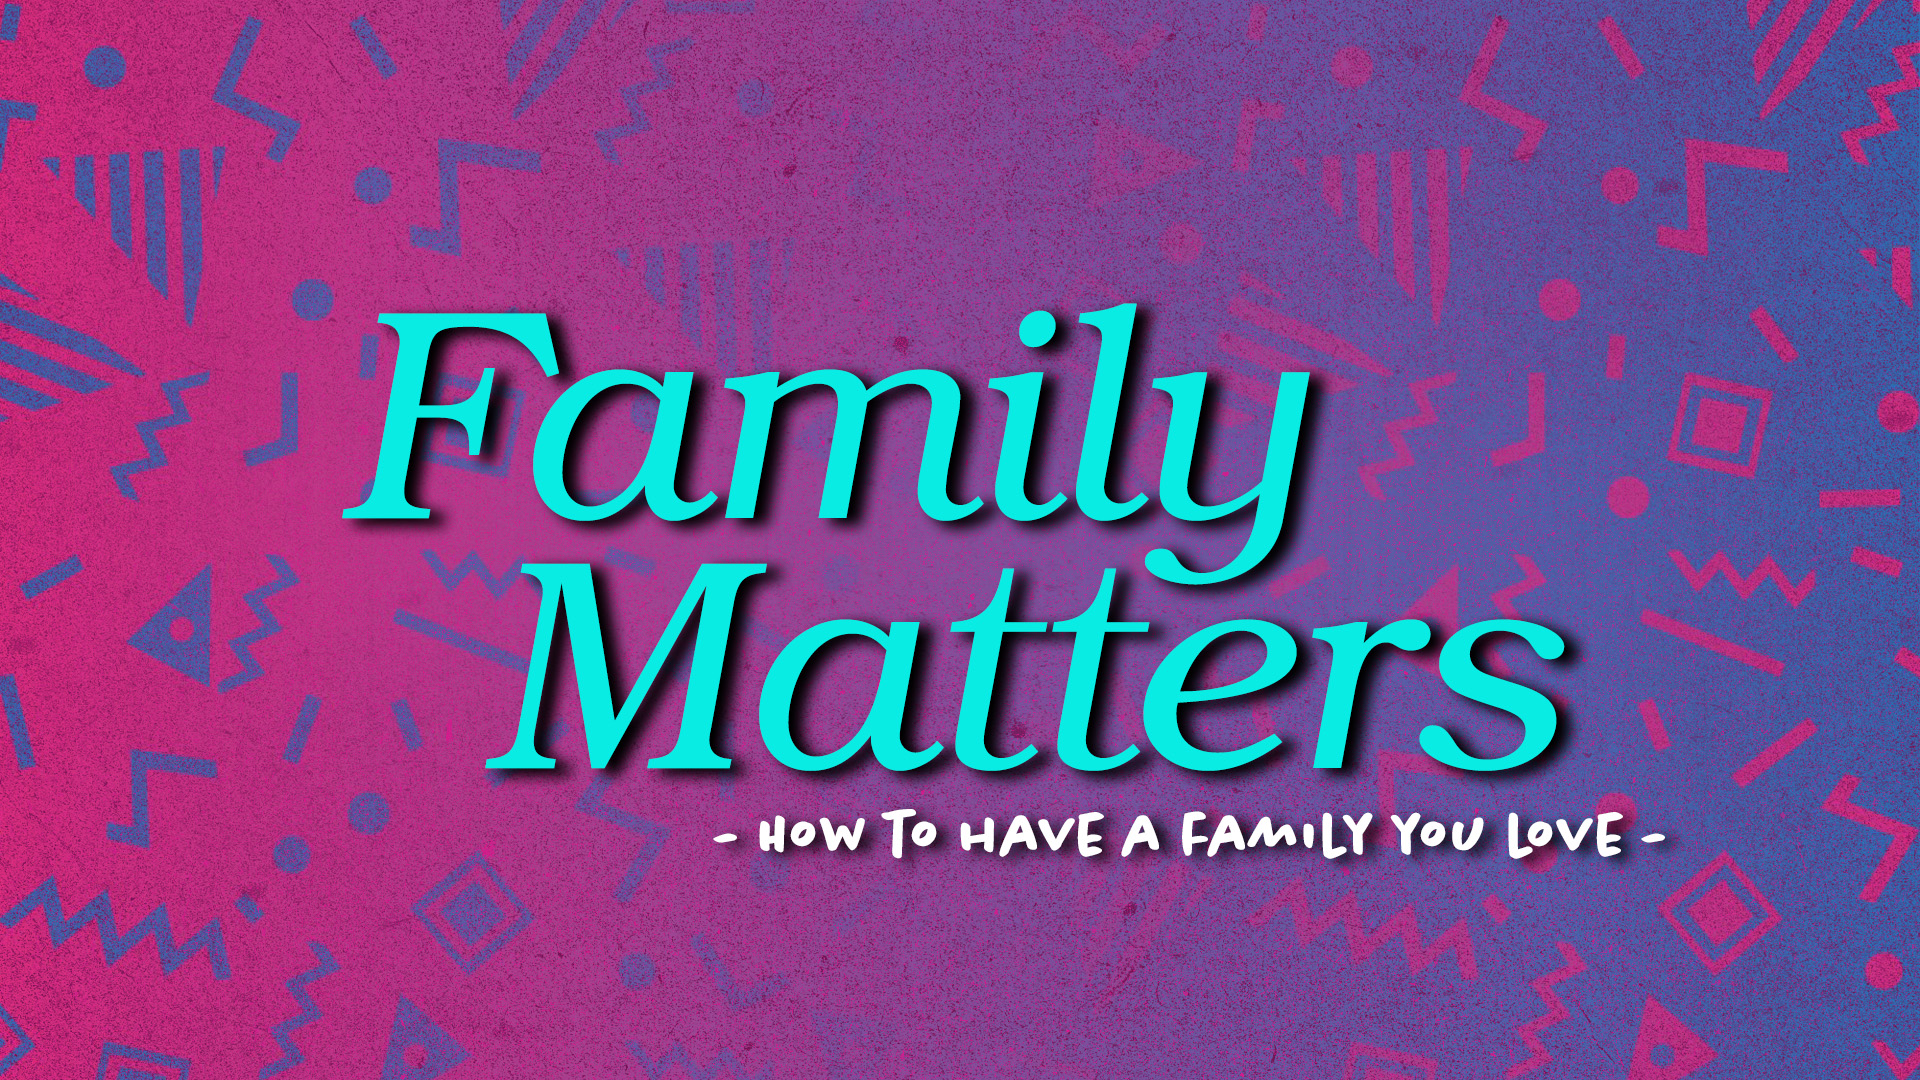 City Church. Family Matters (April 28 2019). Sinner